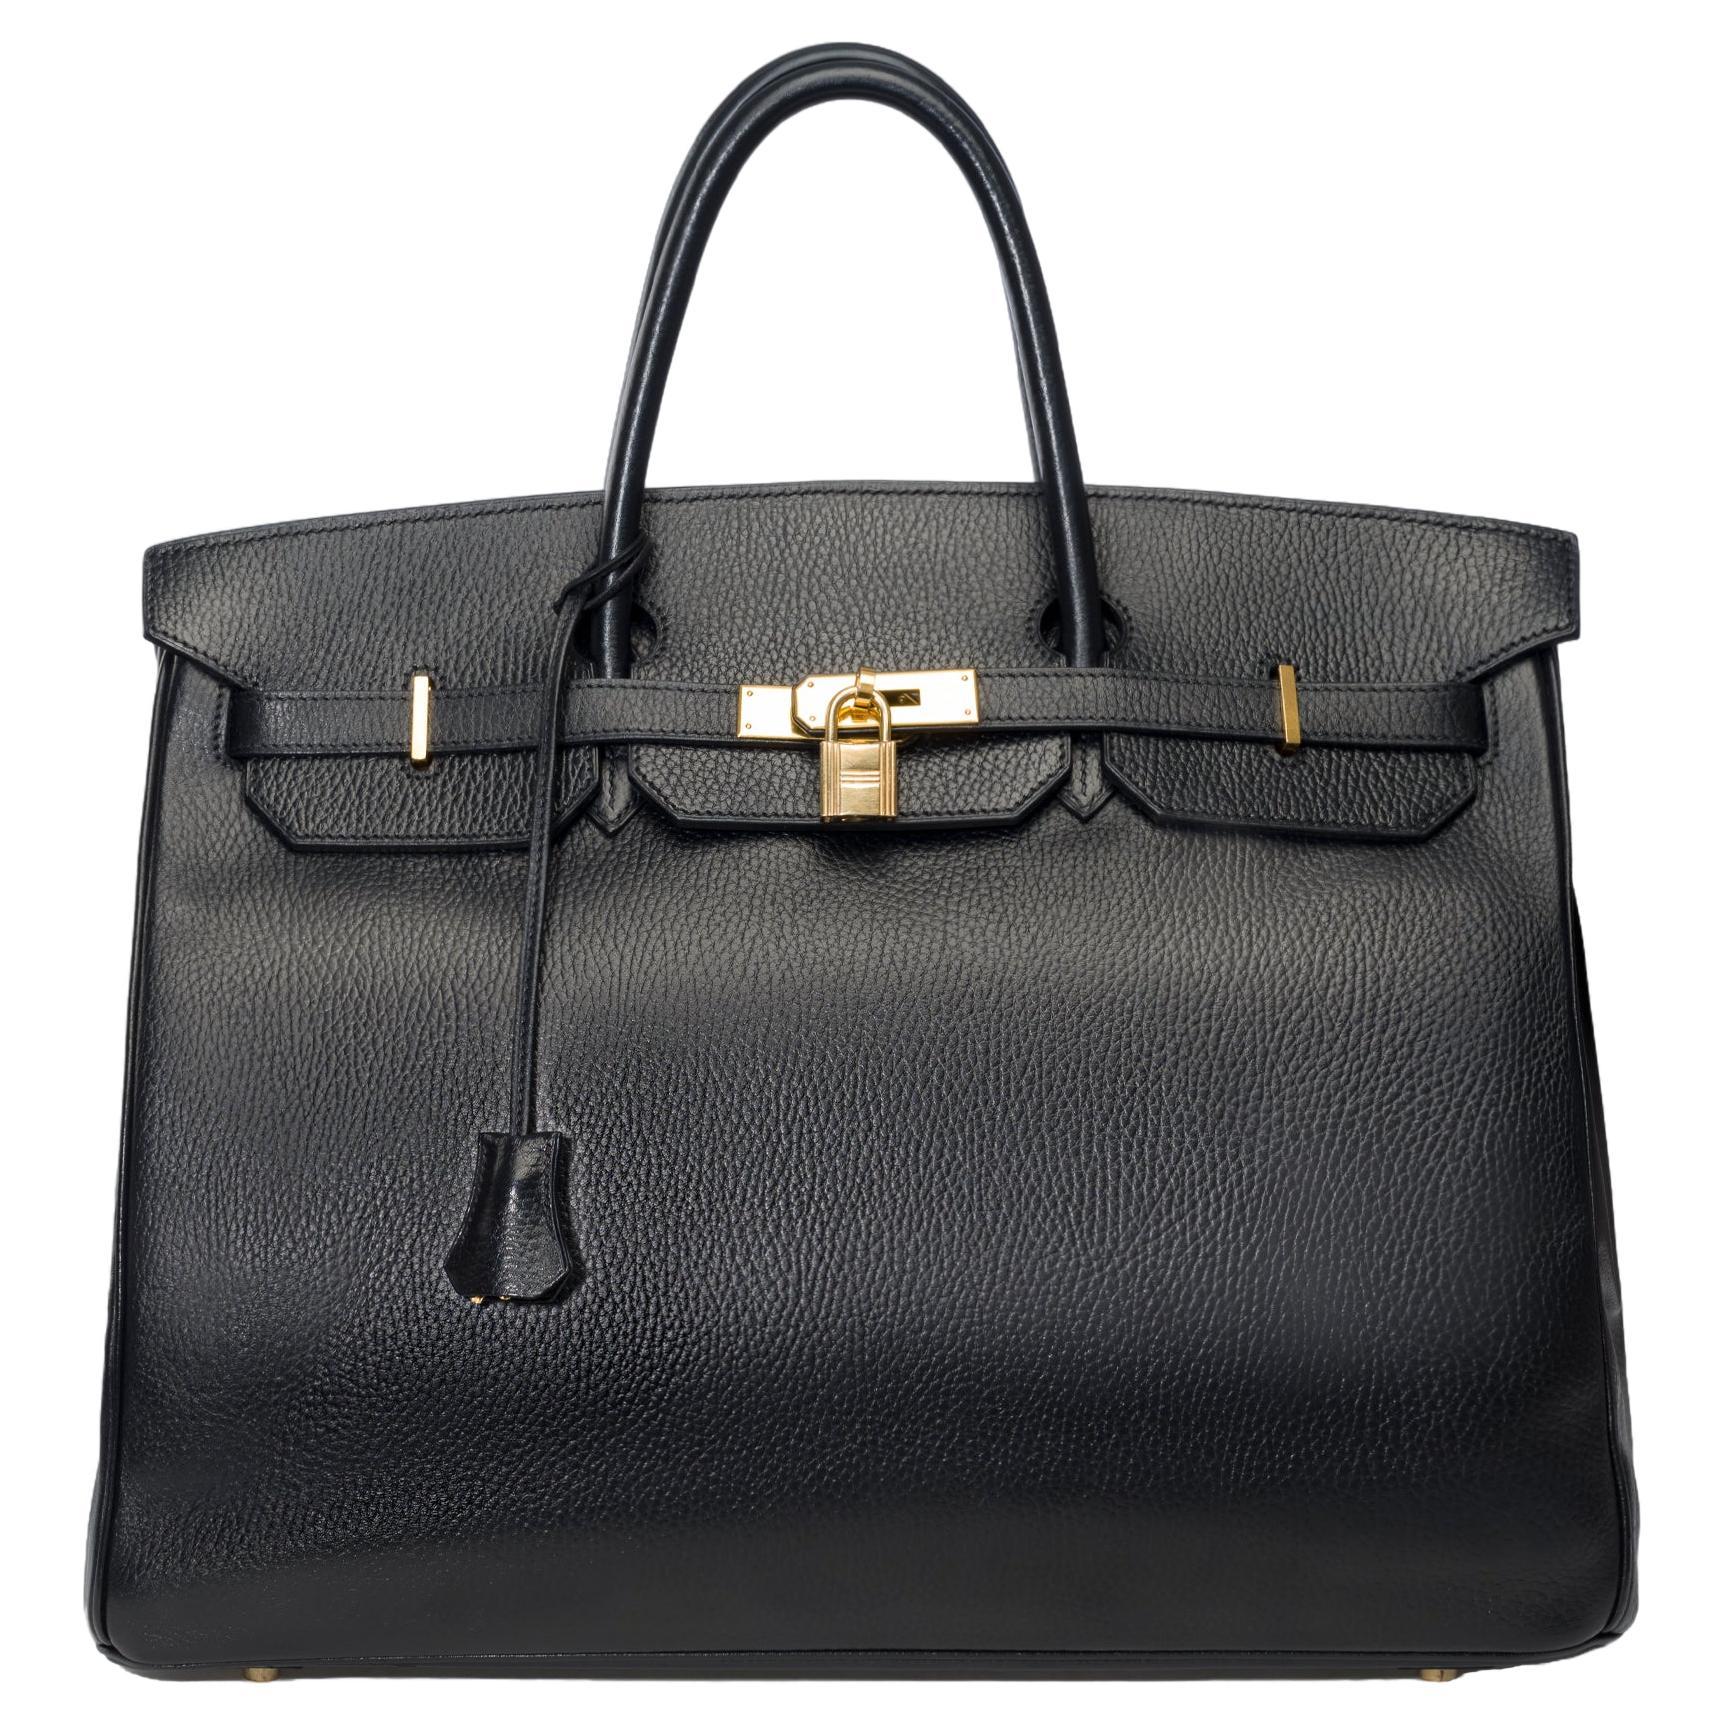 Classy Hermes Birkin 40cm handbag in Black Vache Ardennes Calf leather, GHW